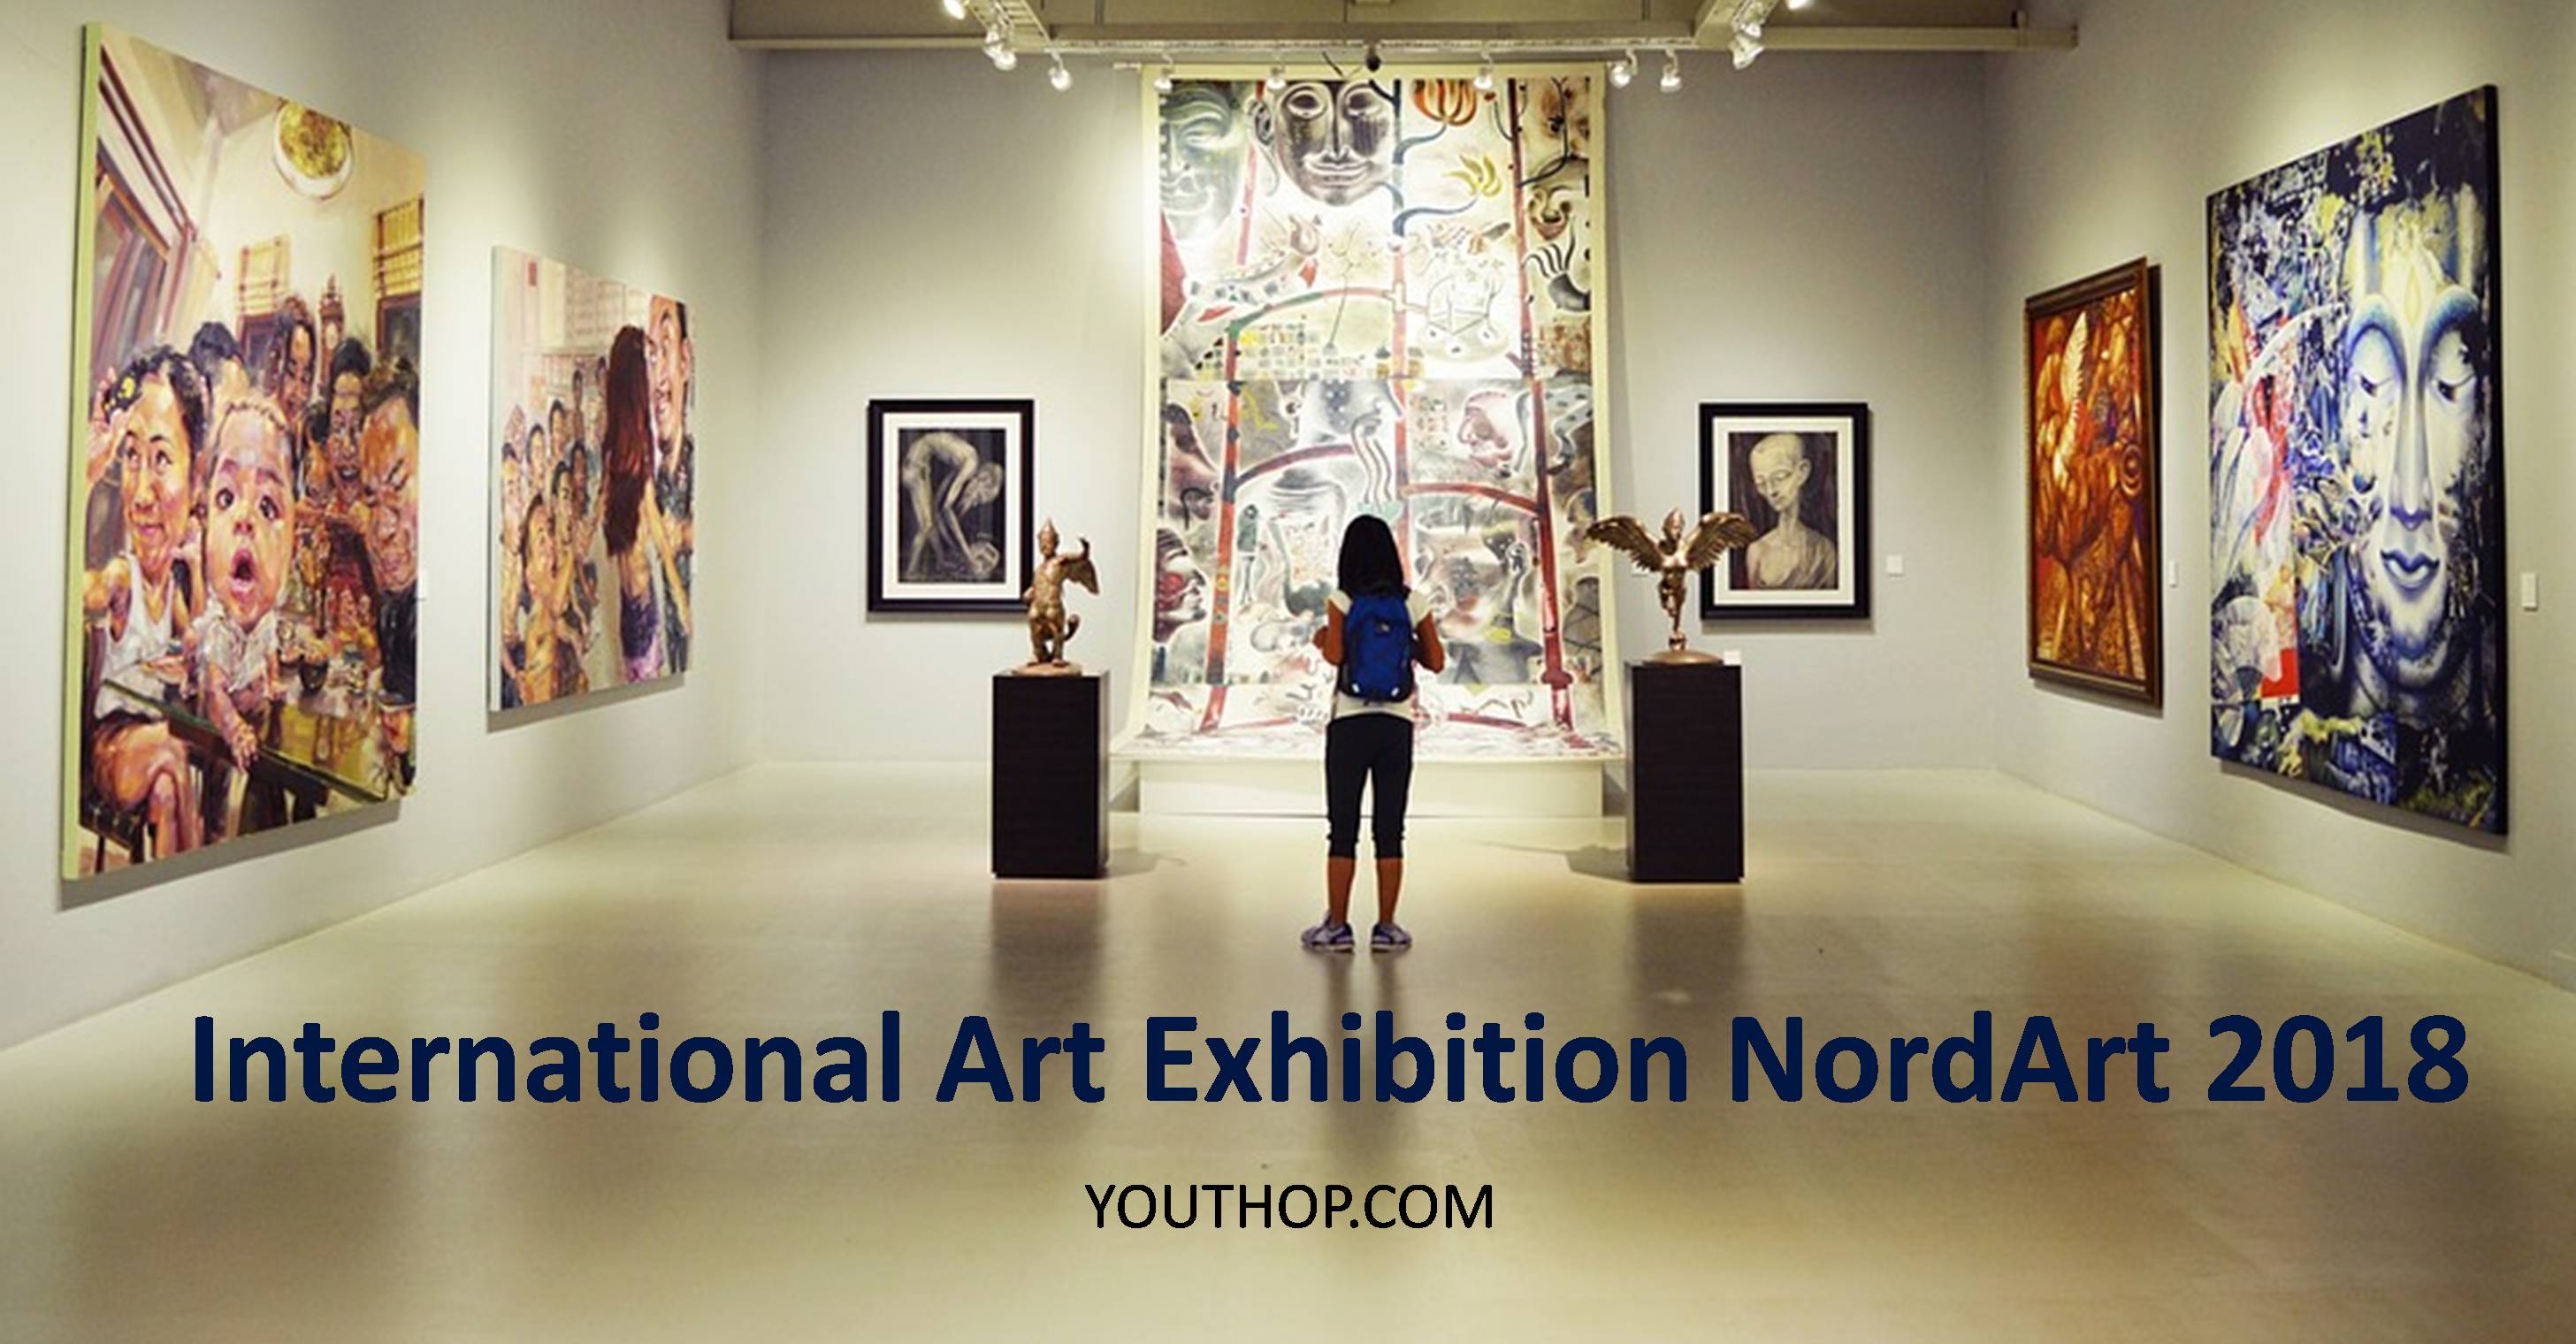 International Art Exhibition Nordart 2018 Youth Opportunities